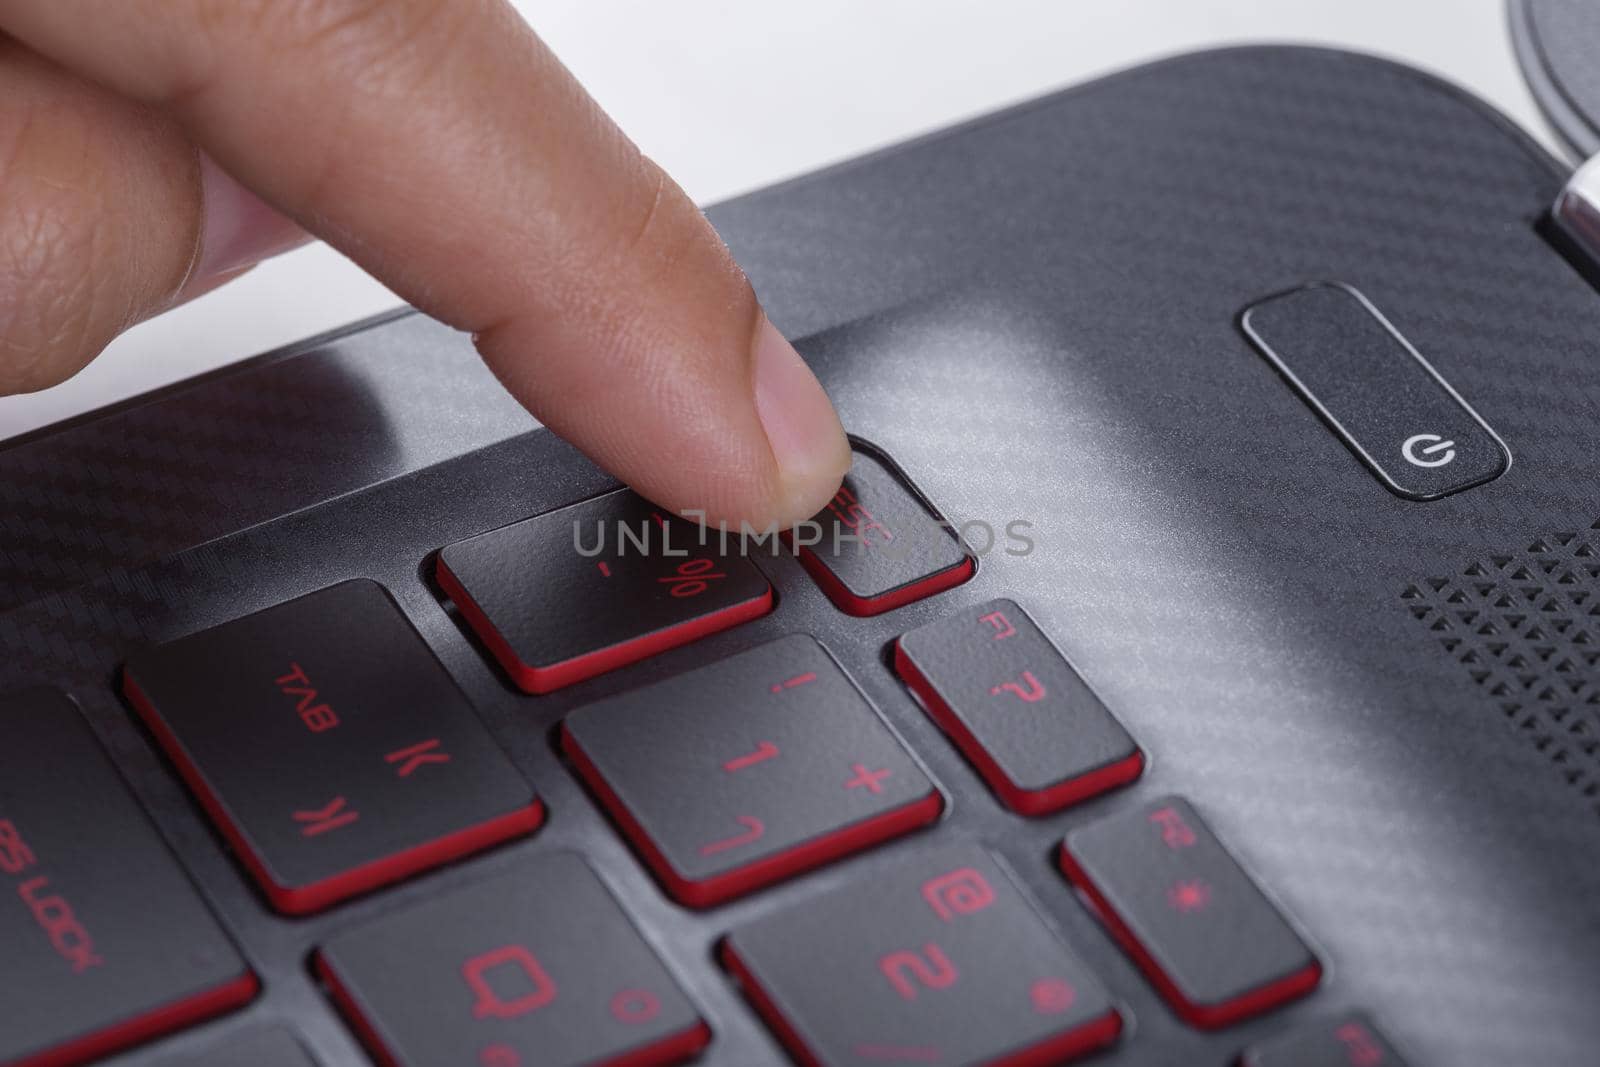 finger pushing esc button on laptop keyboard by geargodz